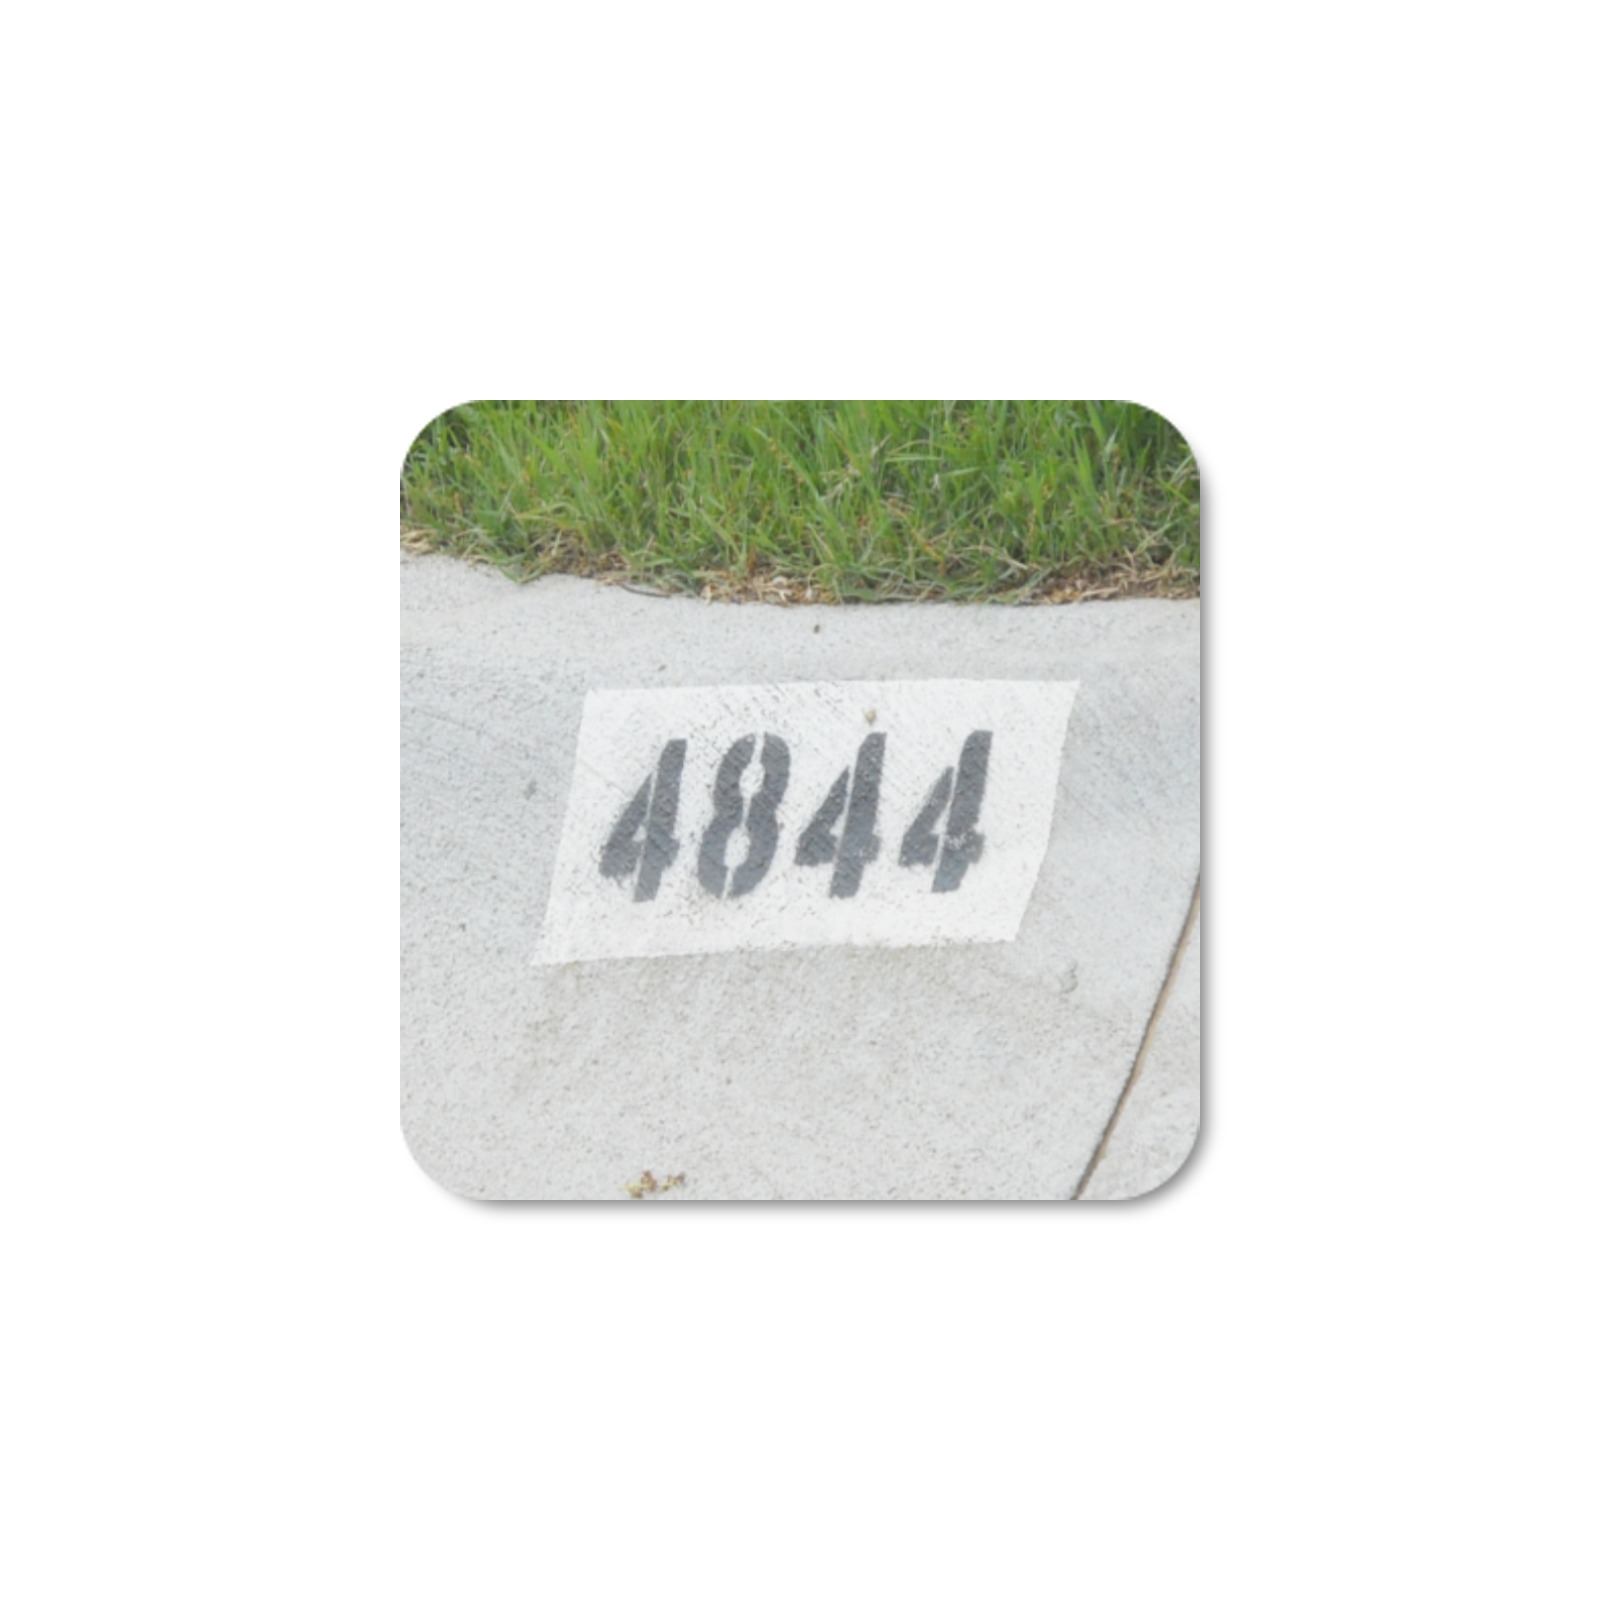 Street Number 4844 Square Fridge Magnet